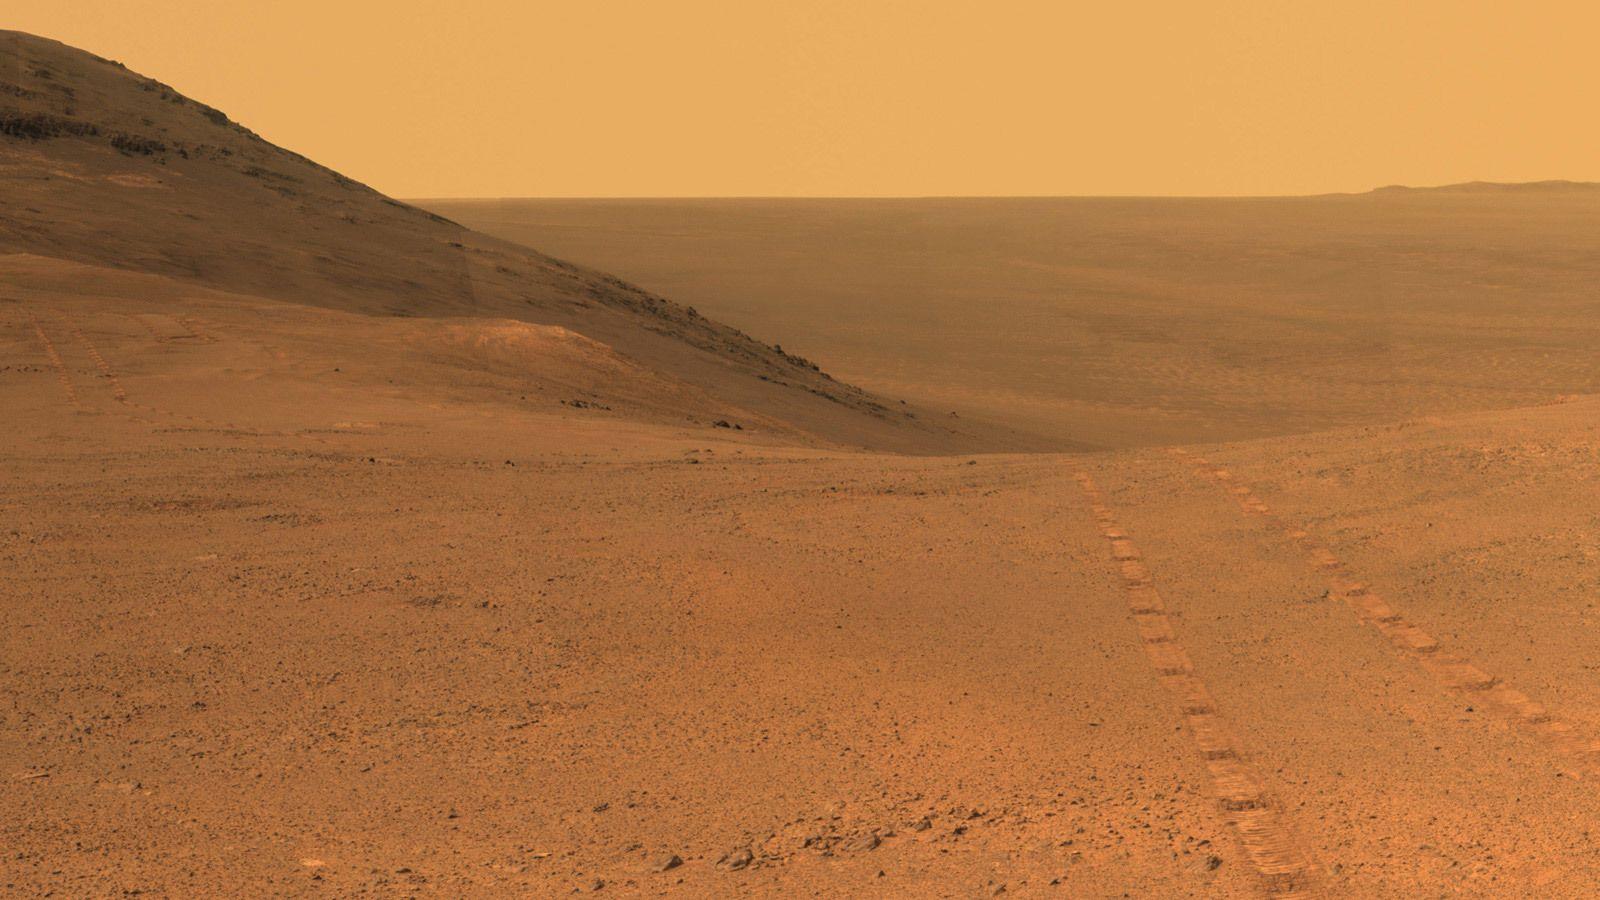 Opportunity rover still MIA as dust settles on Mars